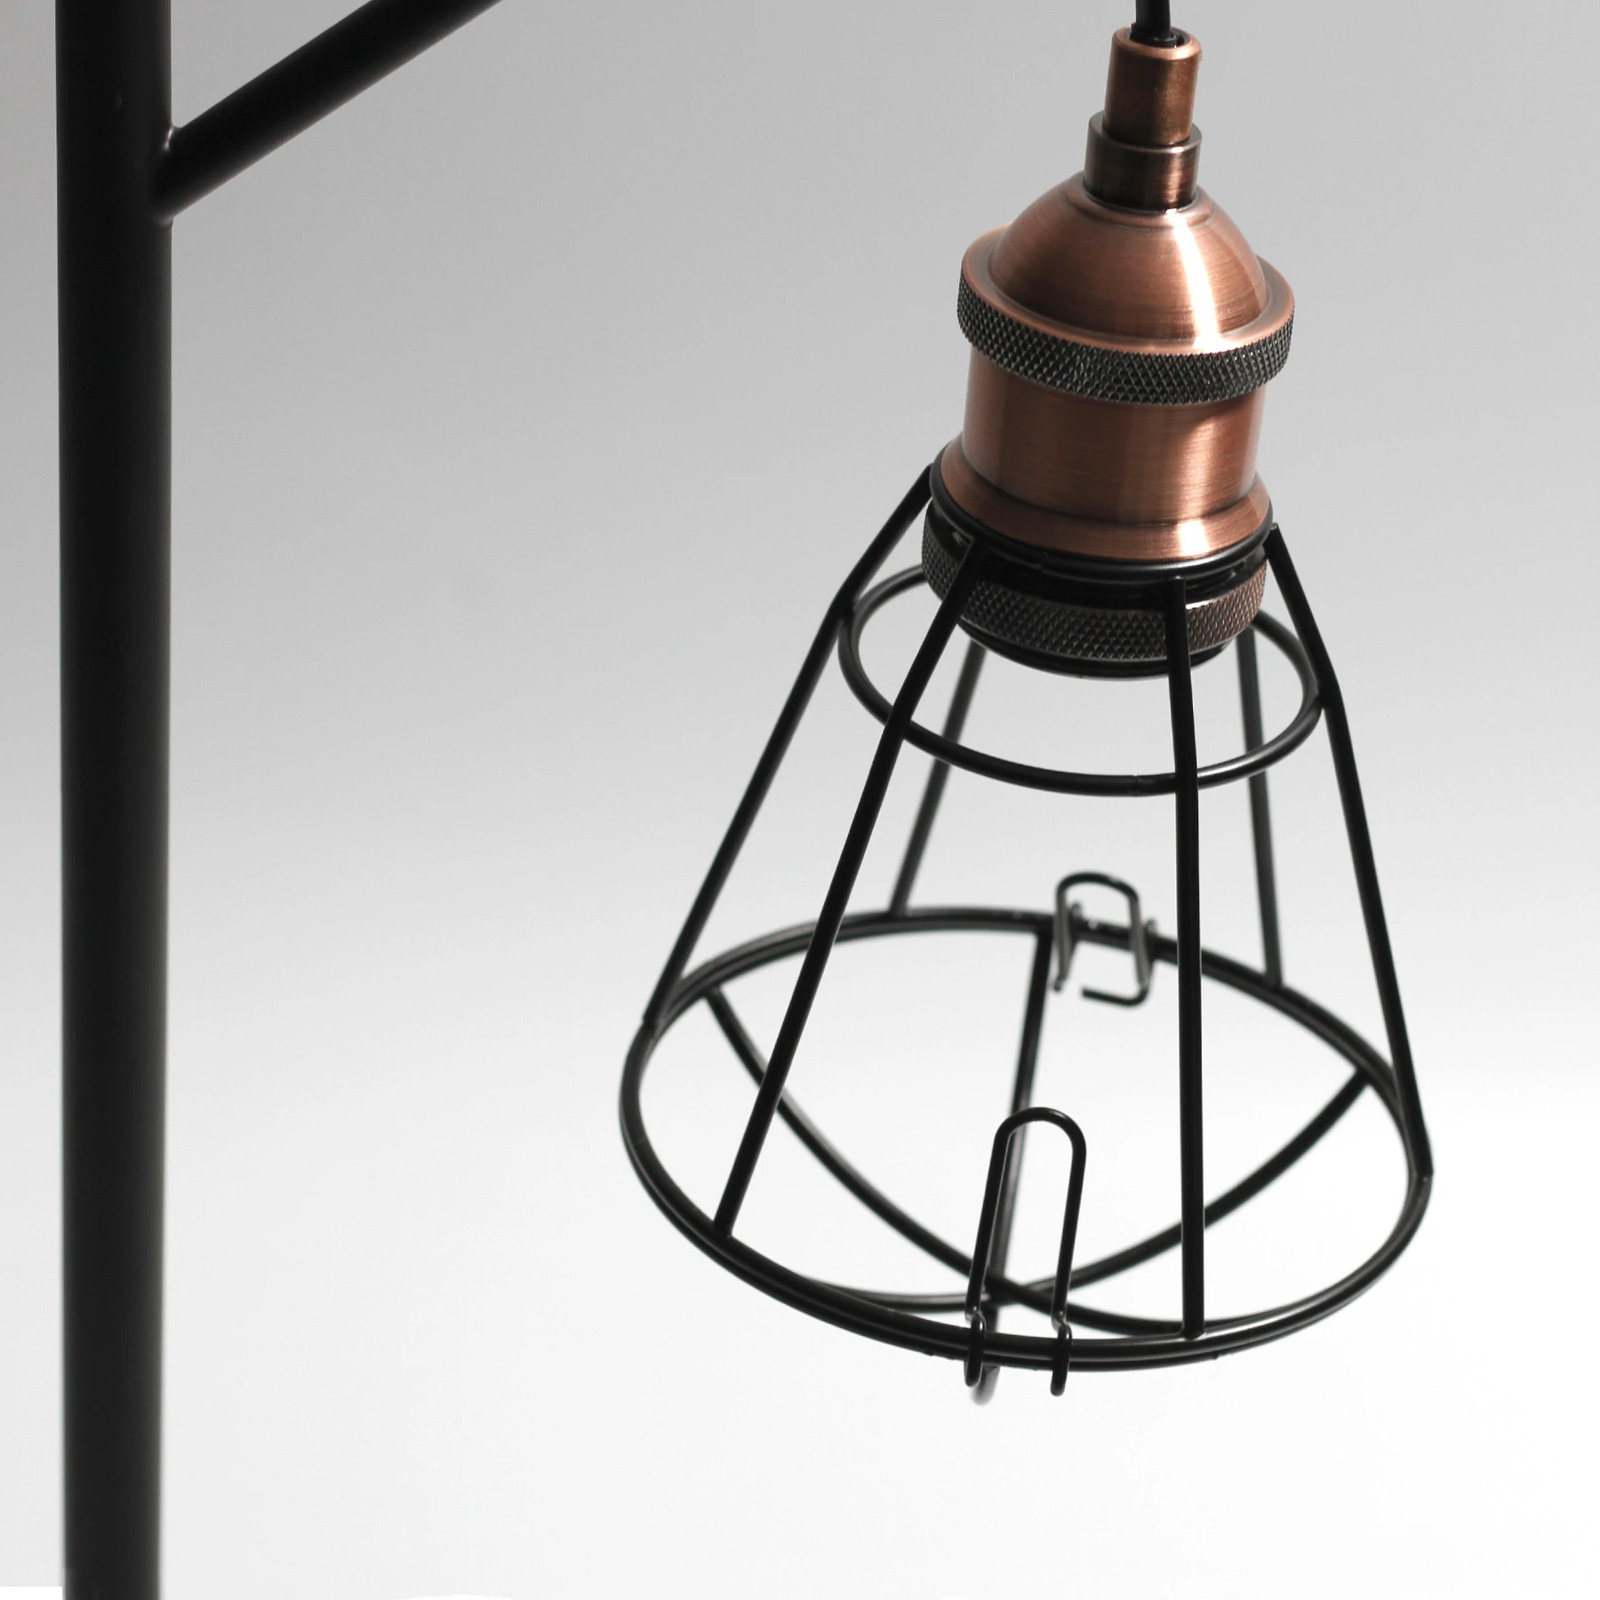 Zehra Table Lamp